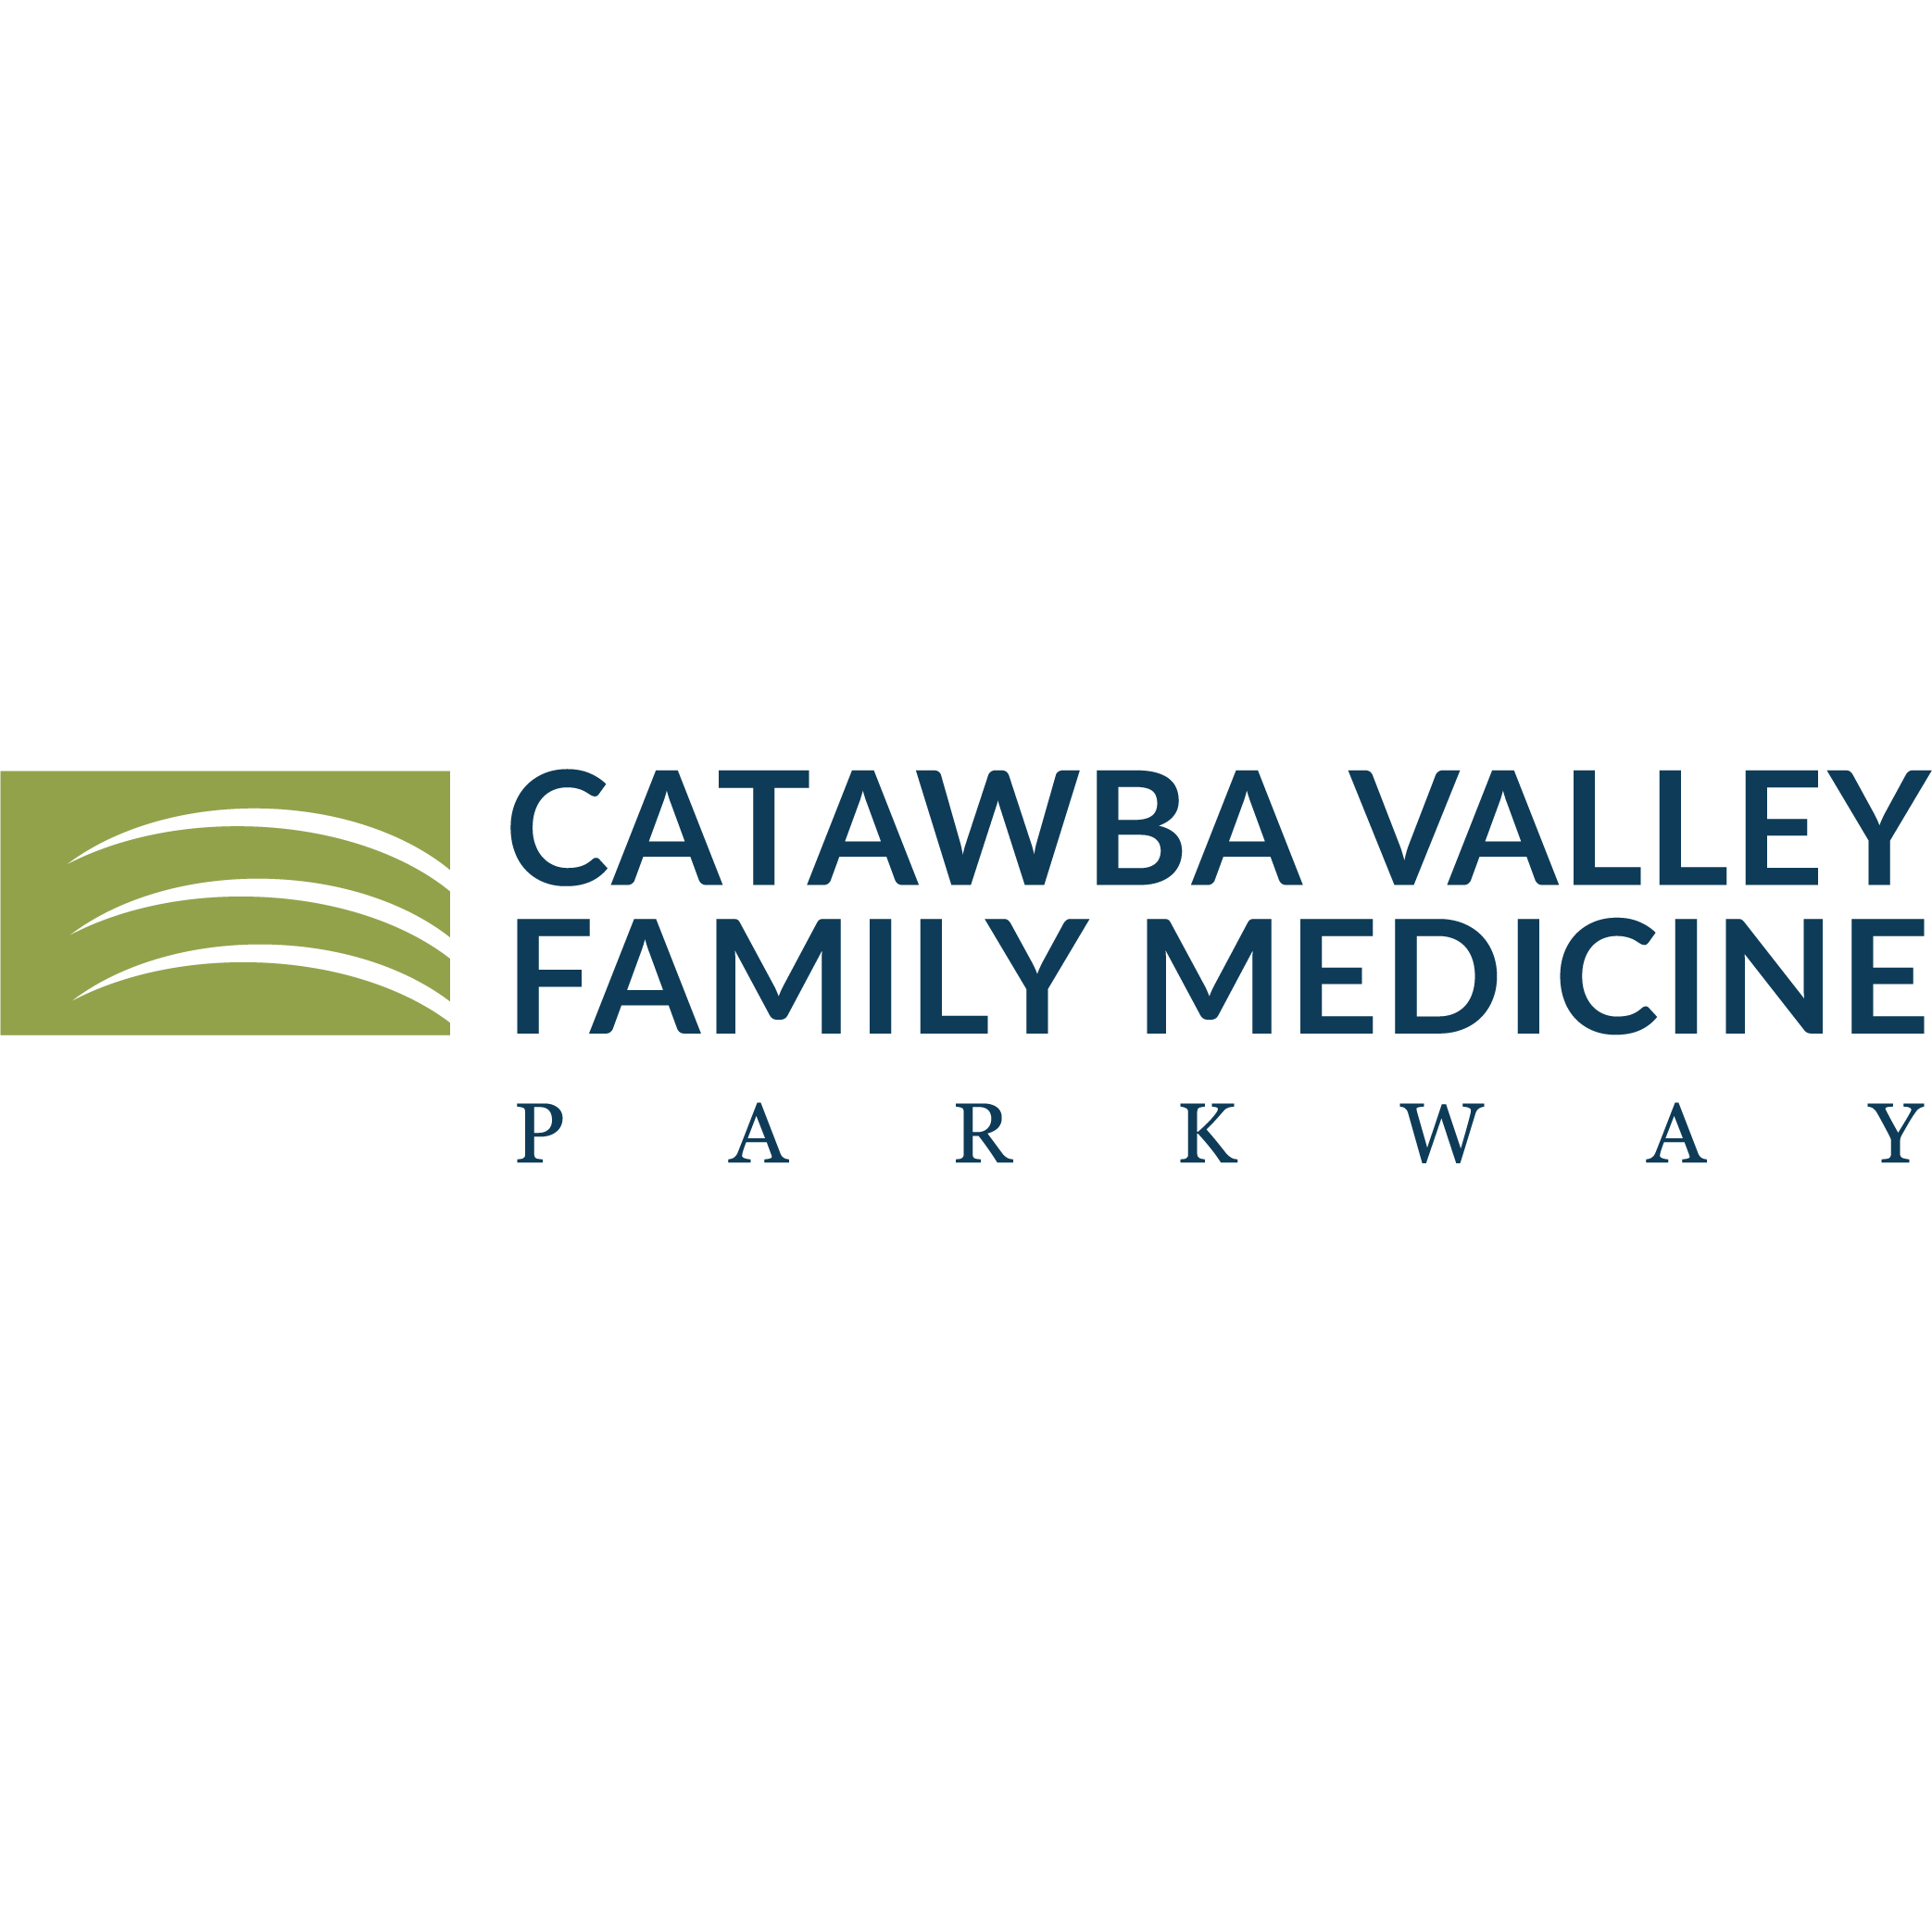 Catawba Valley Family Medicine - Parkway - Hickory, NC 28601 - (828)212-1020 | ShowMeLocal.com